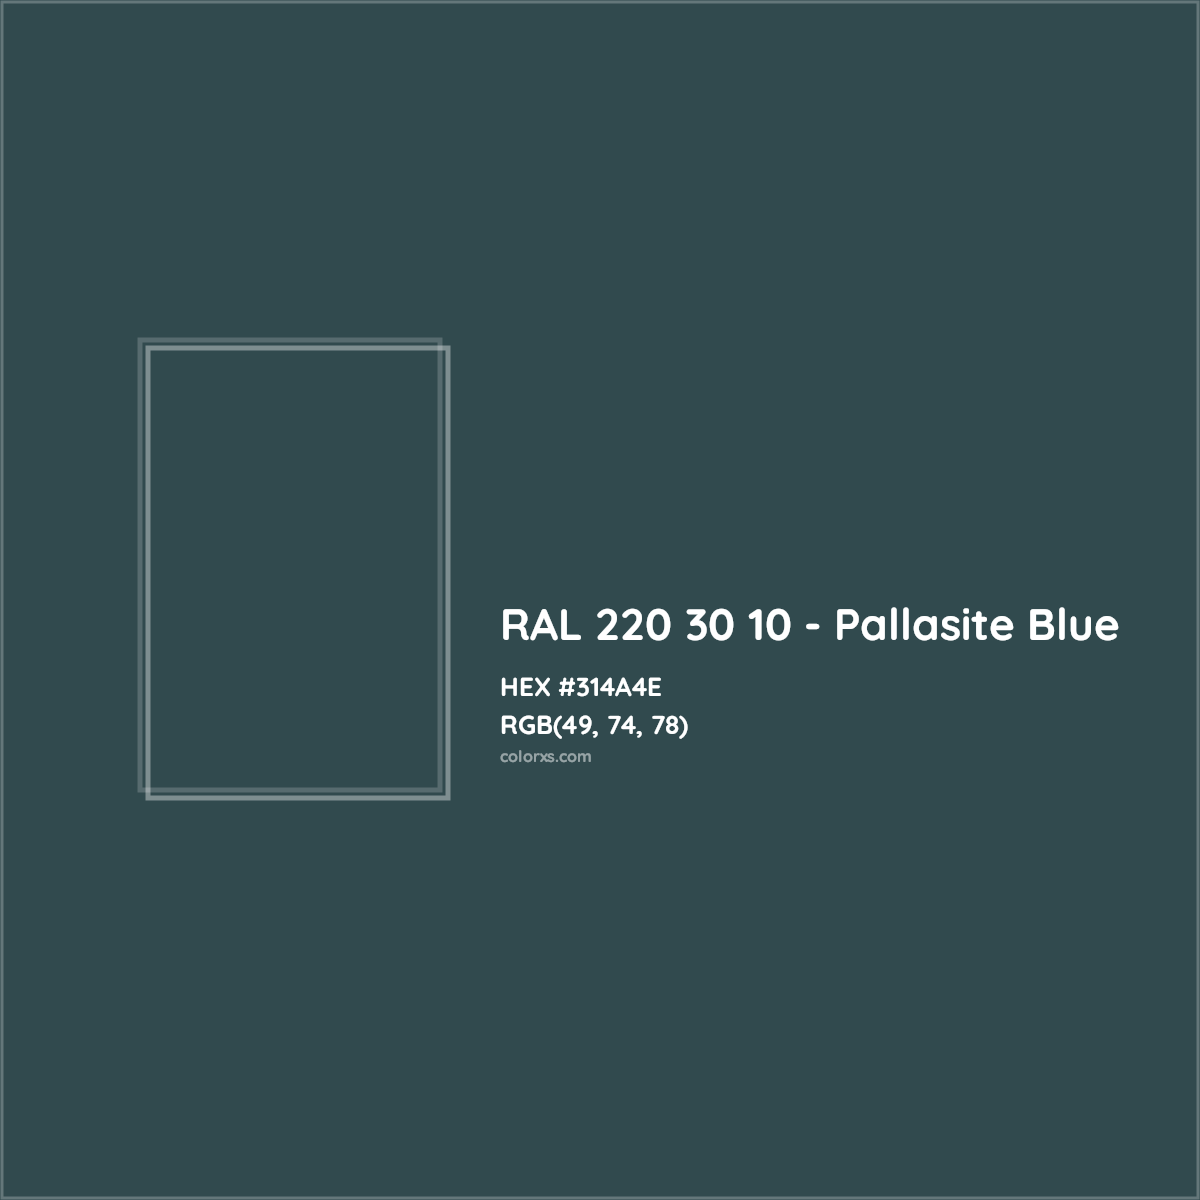 HEX #314A4E RAL 220 30 10 - Pallasite Blue CMS RAL Design - Color Code